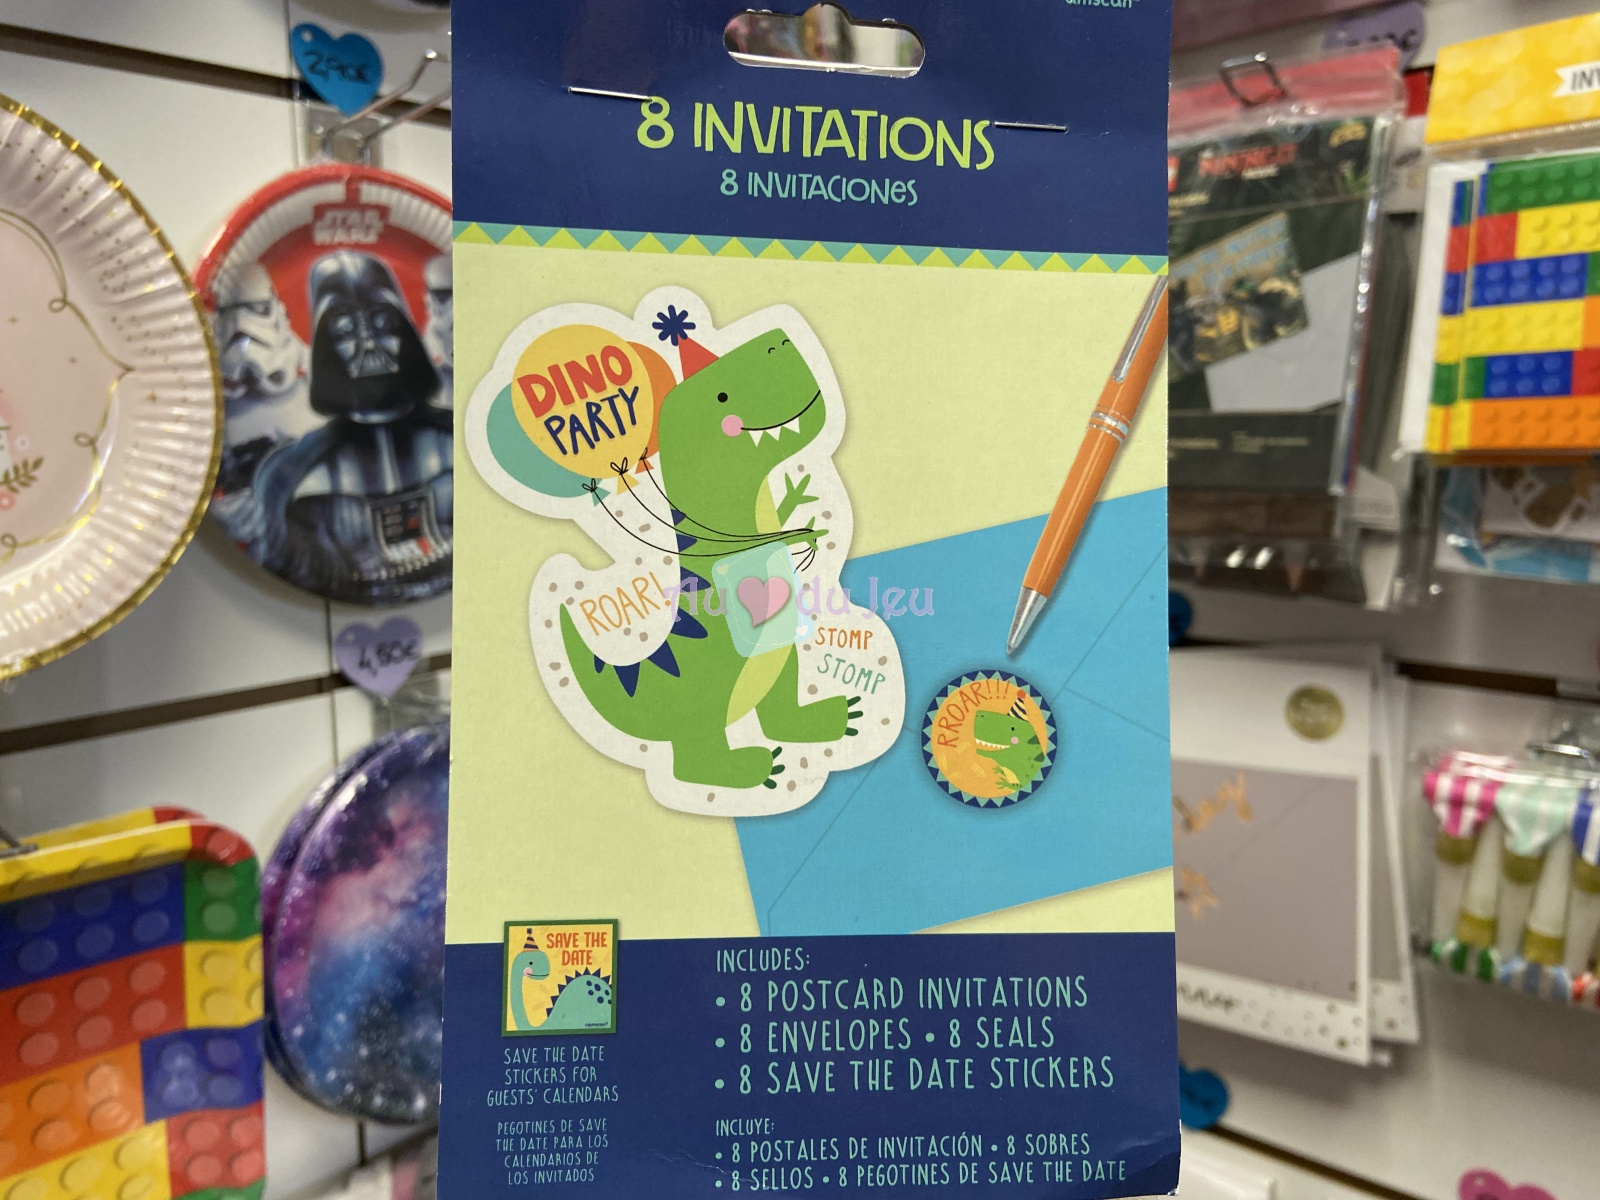 8 Invitations Dino Party